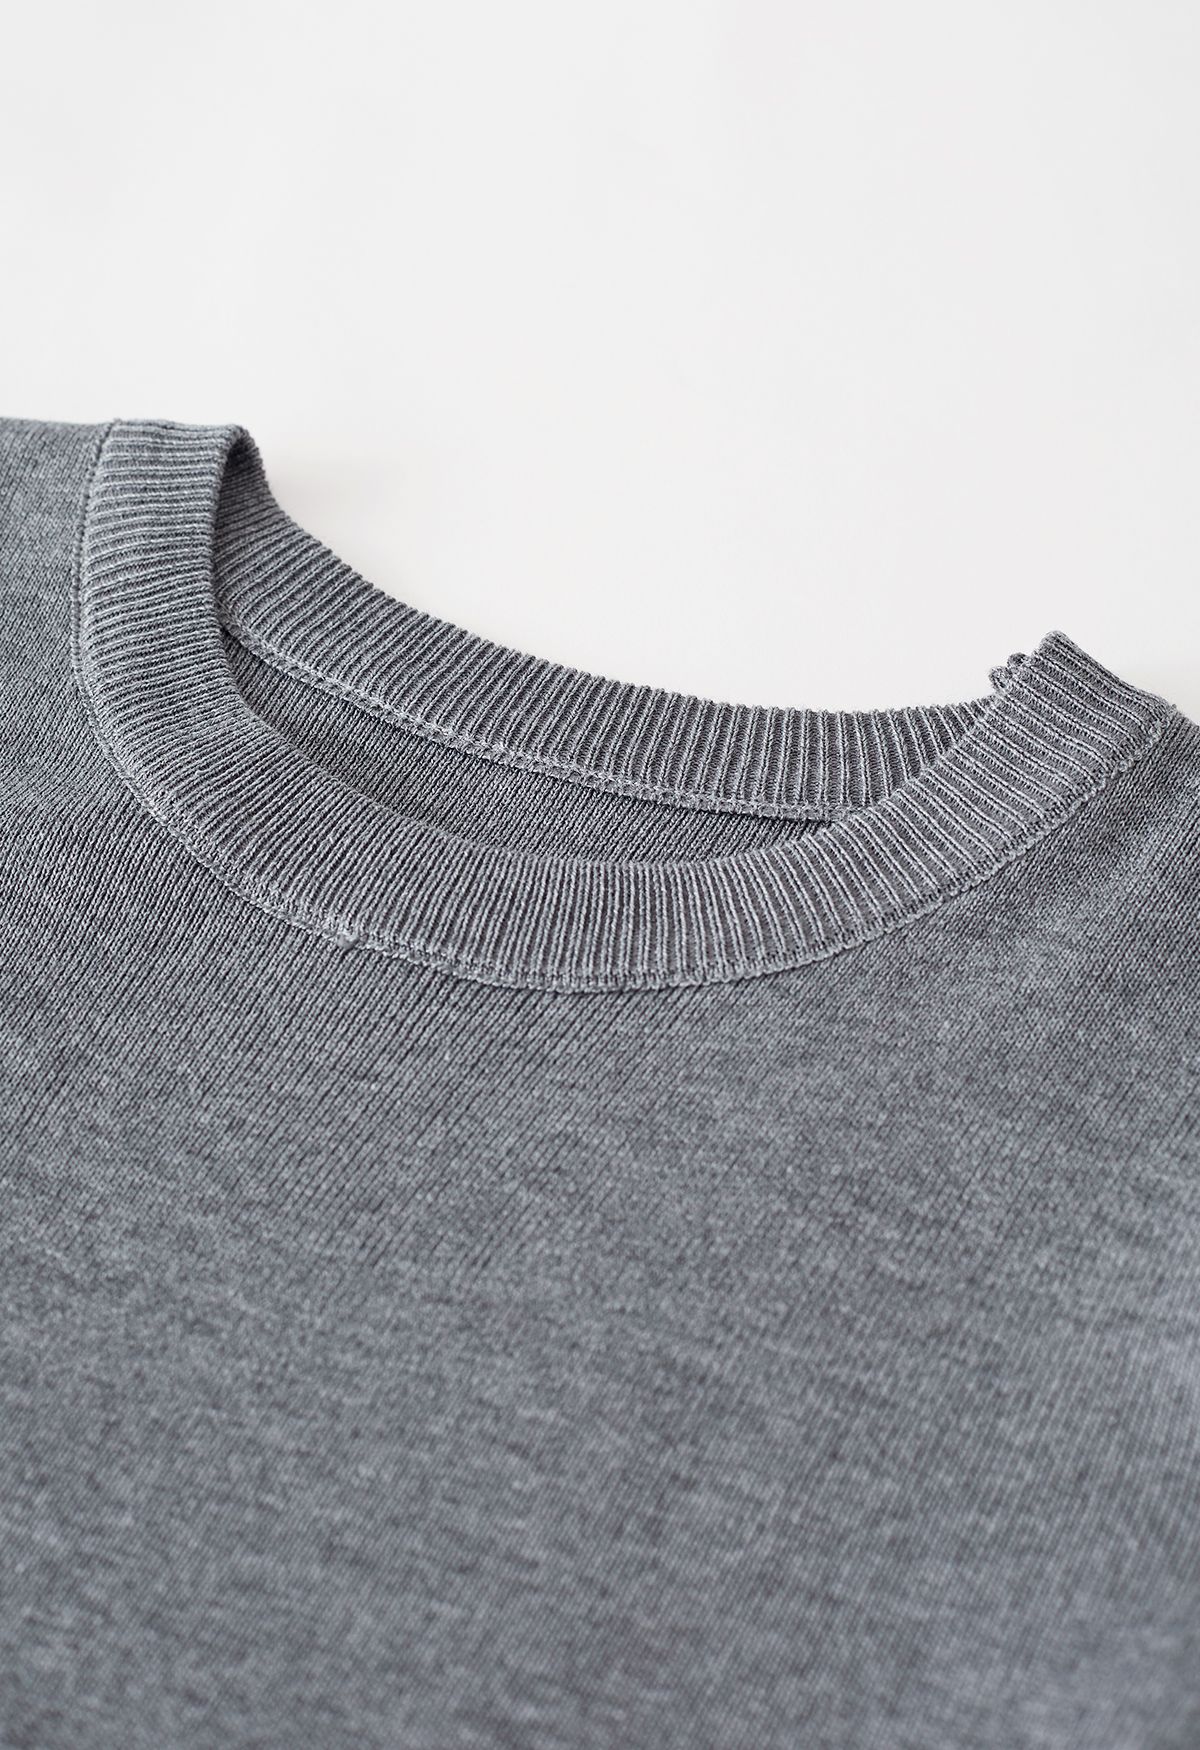 Paisley Crochet Sleeve Knit Top in Grey